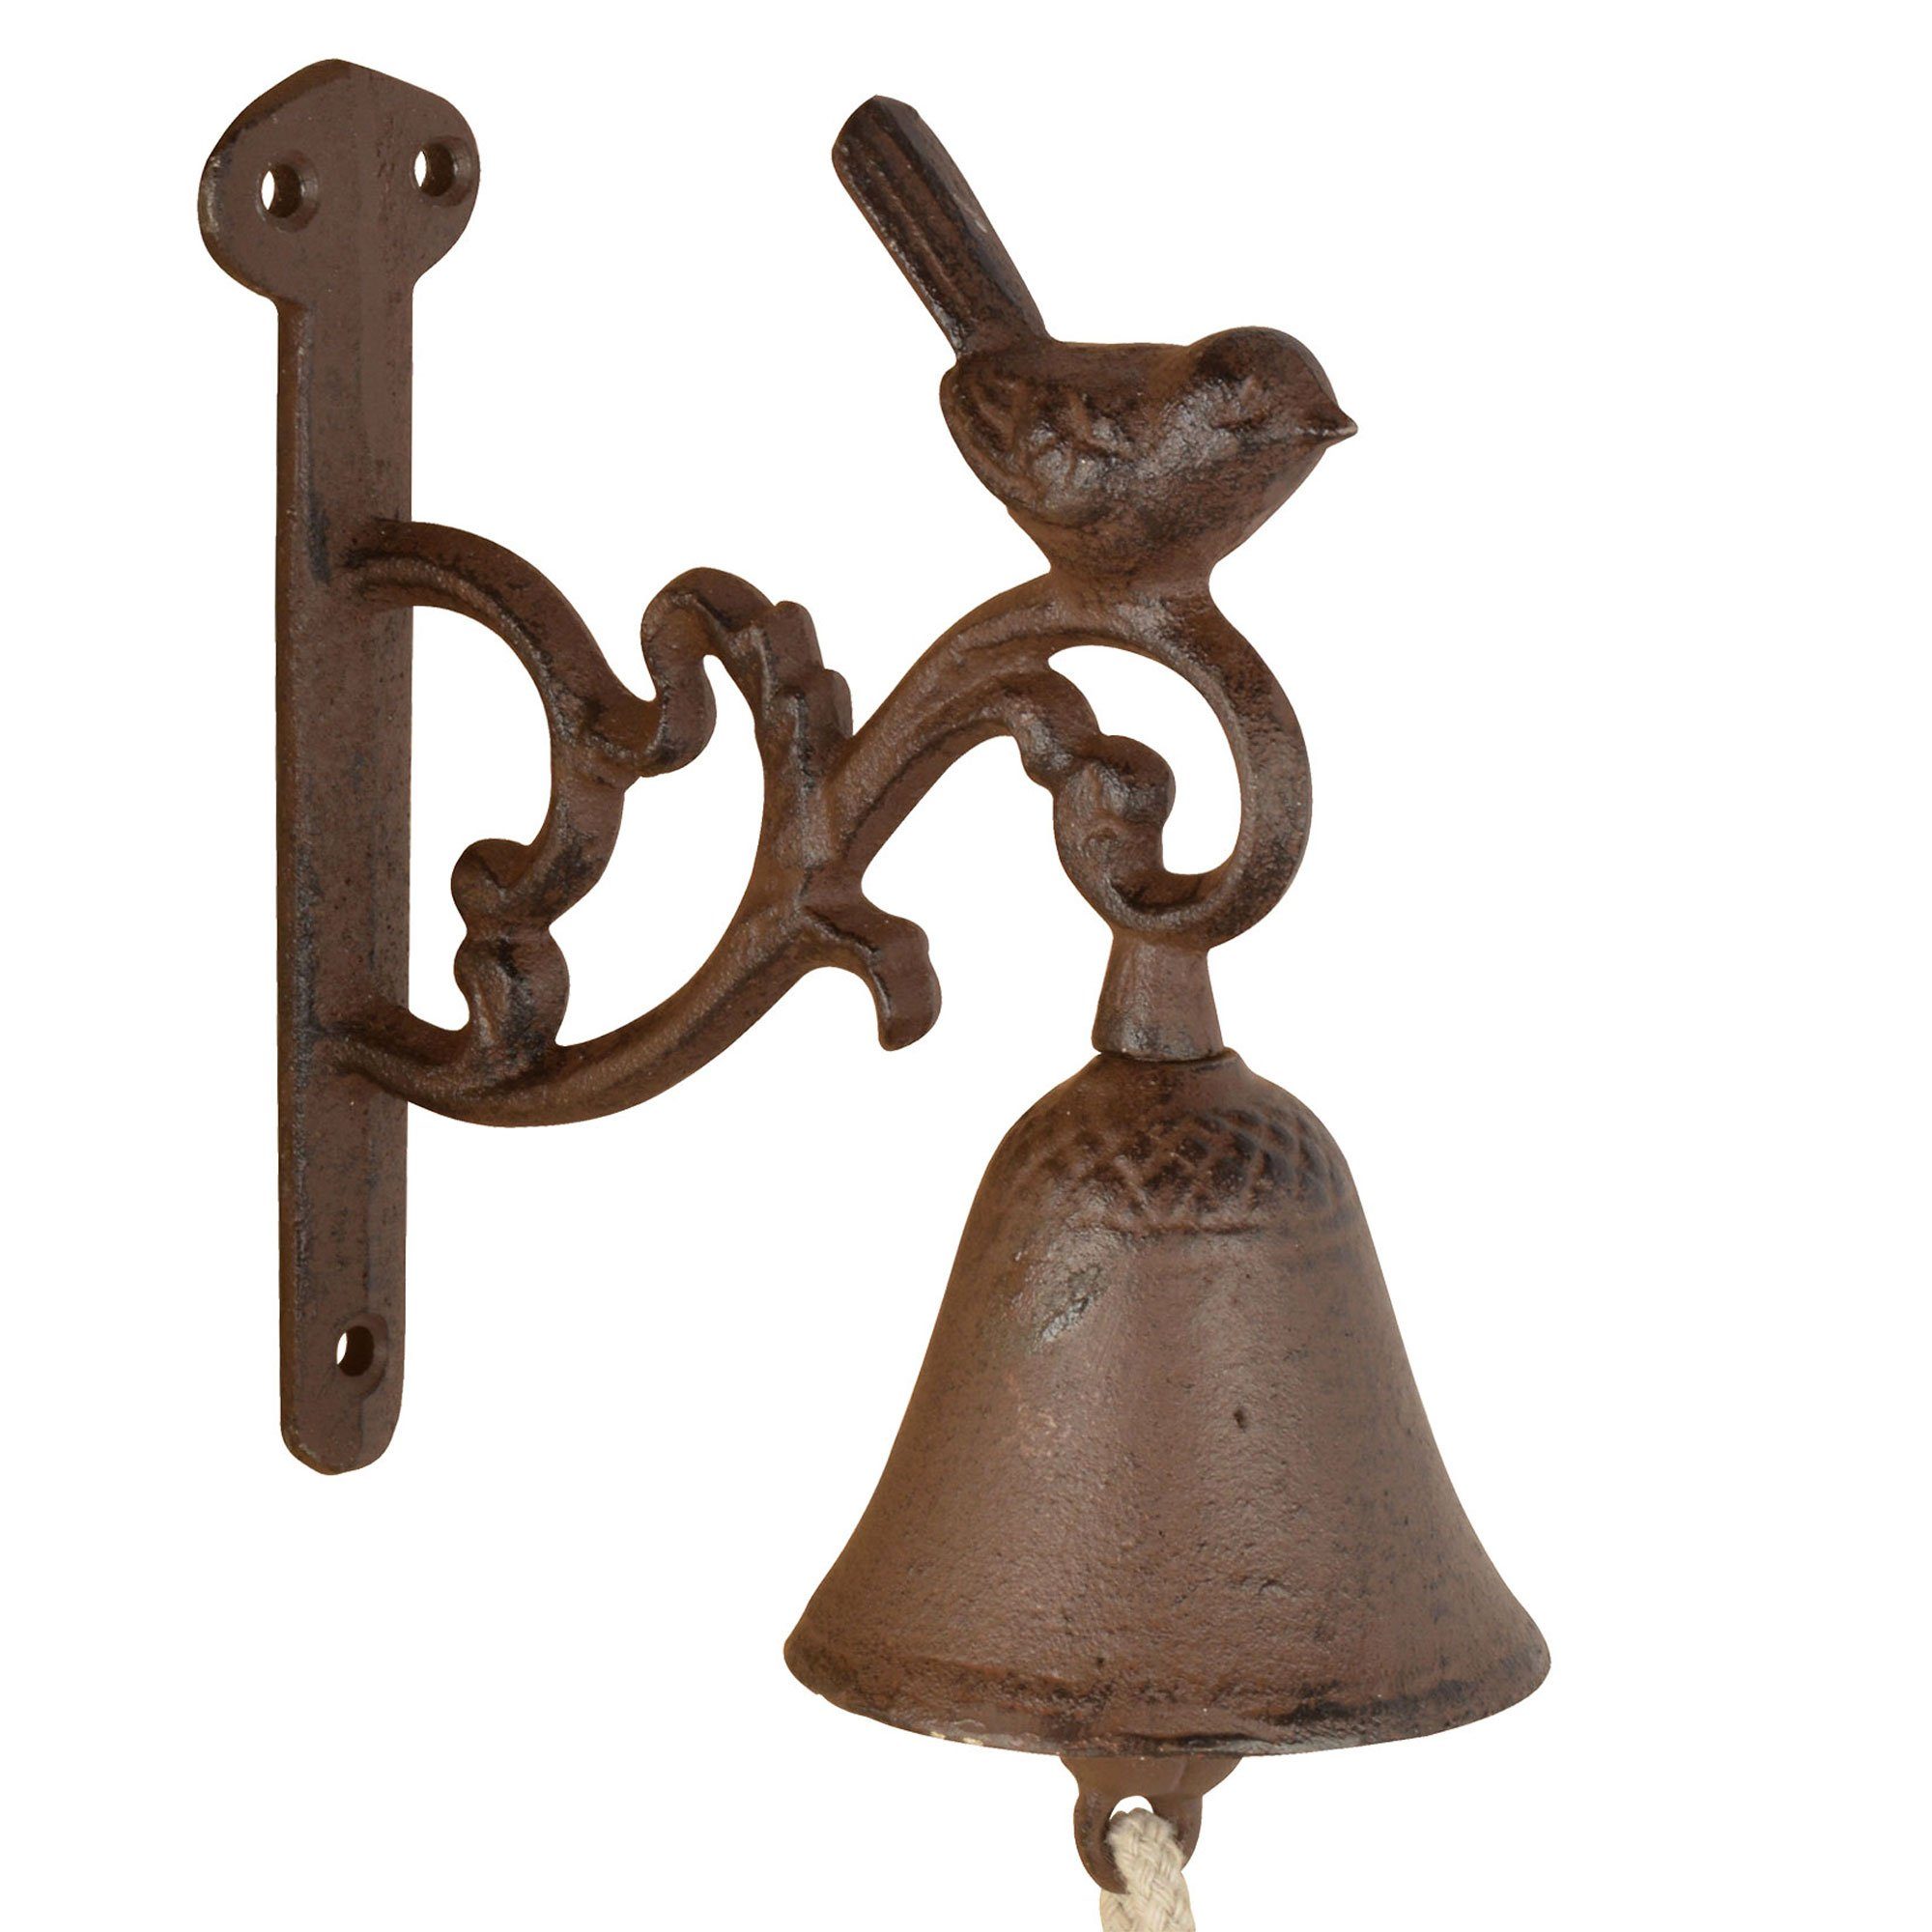 esschert design Glocke (Türglocke) DESIGN S NEU, Landhaus Gusseisen bell Türglocke Vogel Dekoobjekt ESSCHERT door braun